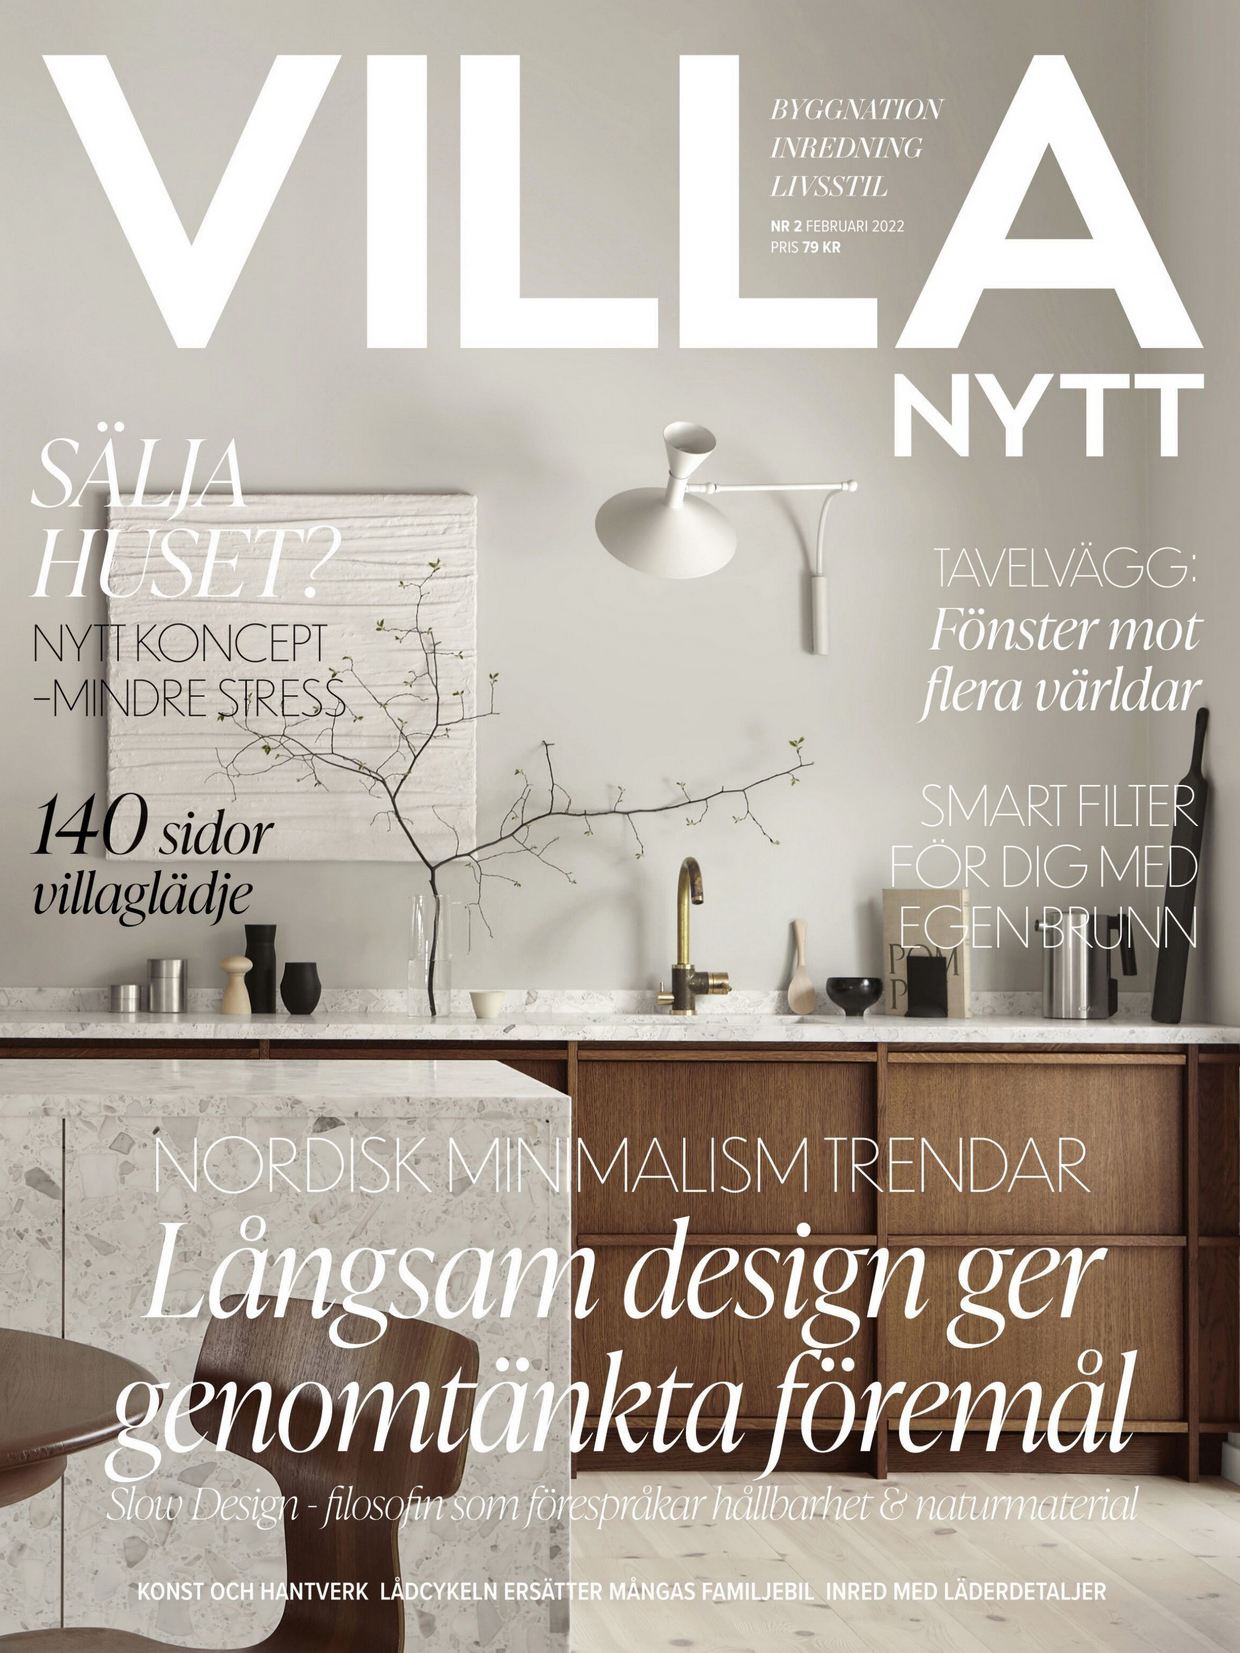 《Villanytt》瑞典室内设计趋势杂志2022年02月号